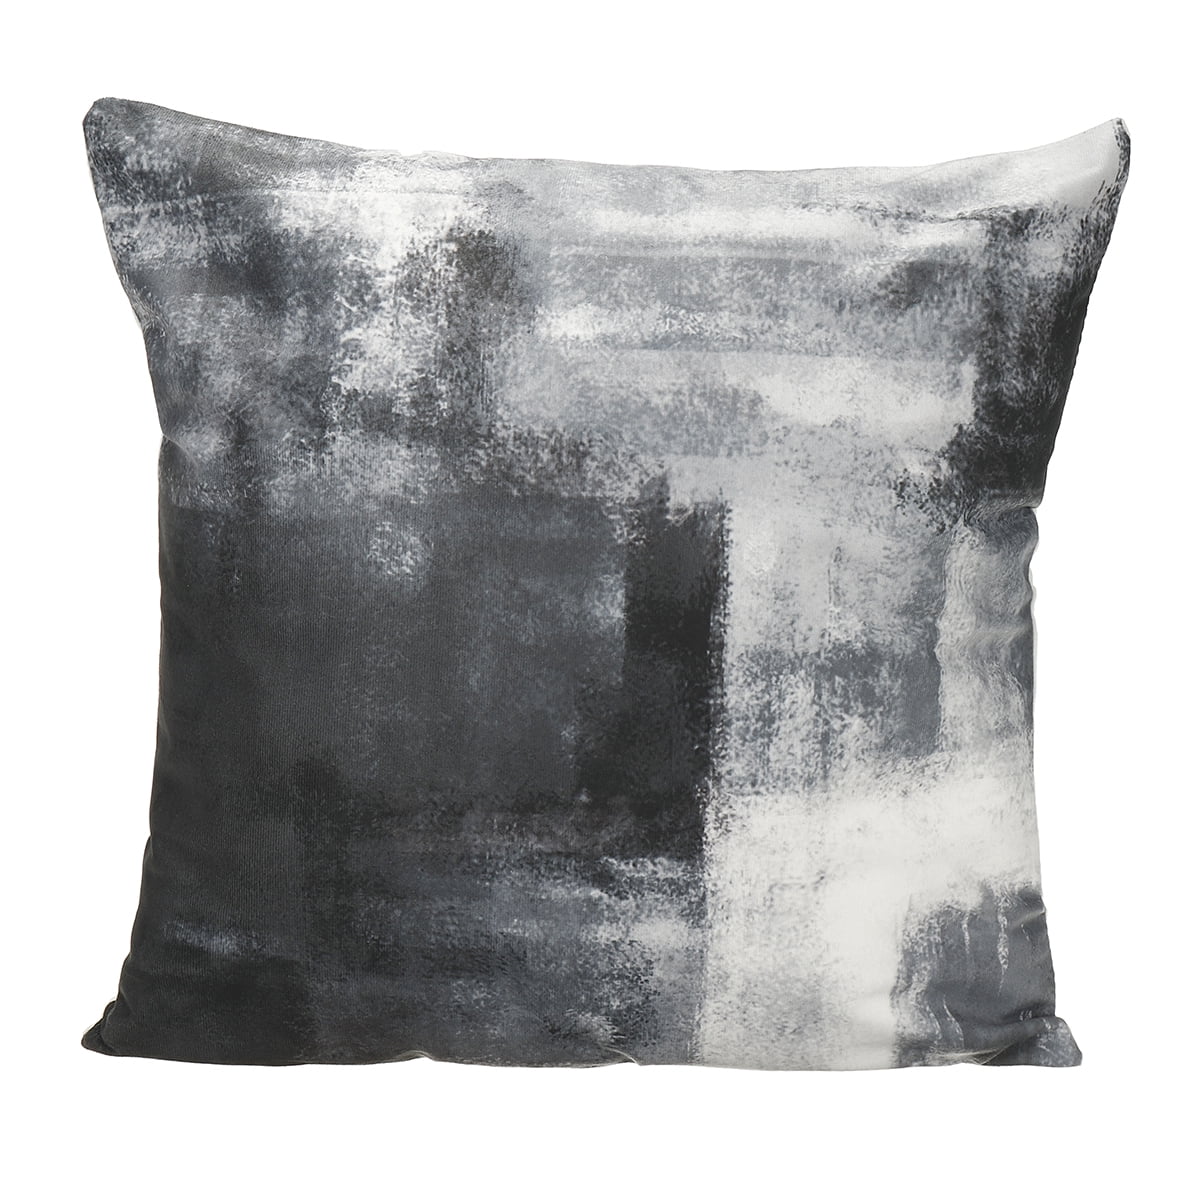 18" Cushion Cover Geometric Pillow Case Pillowcase Sofa Home Decor Silver Gray